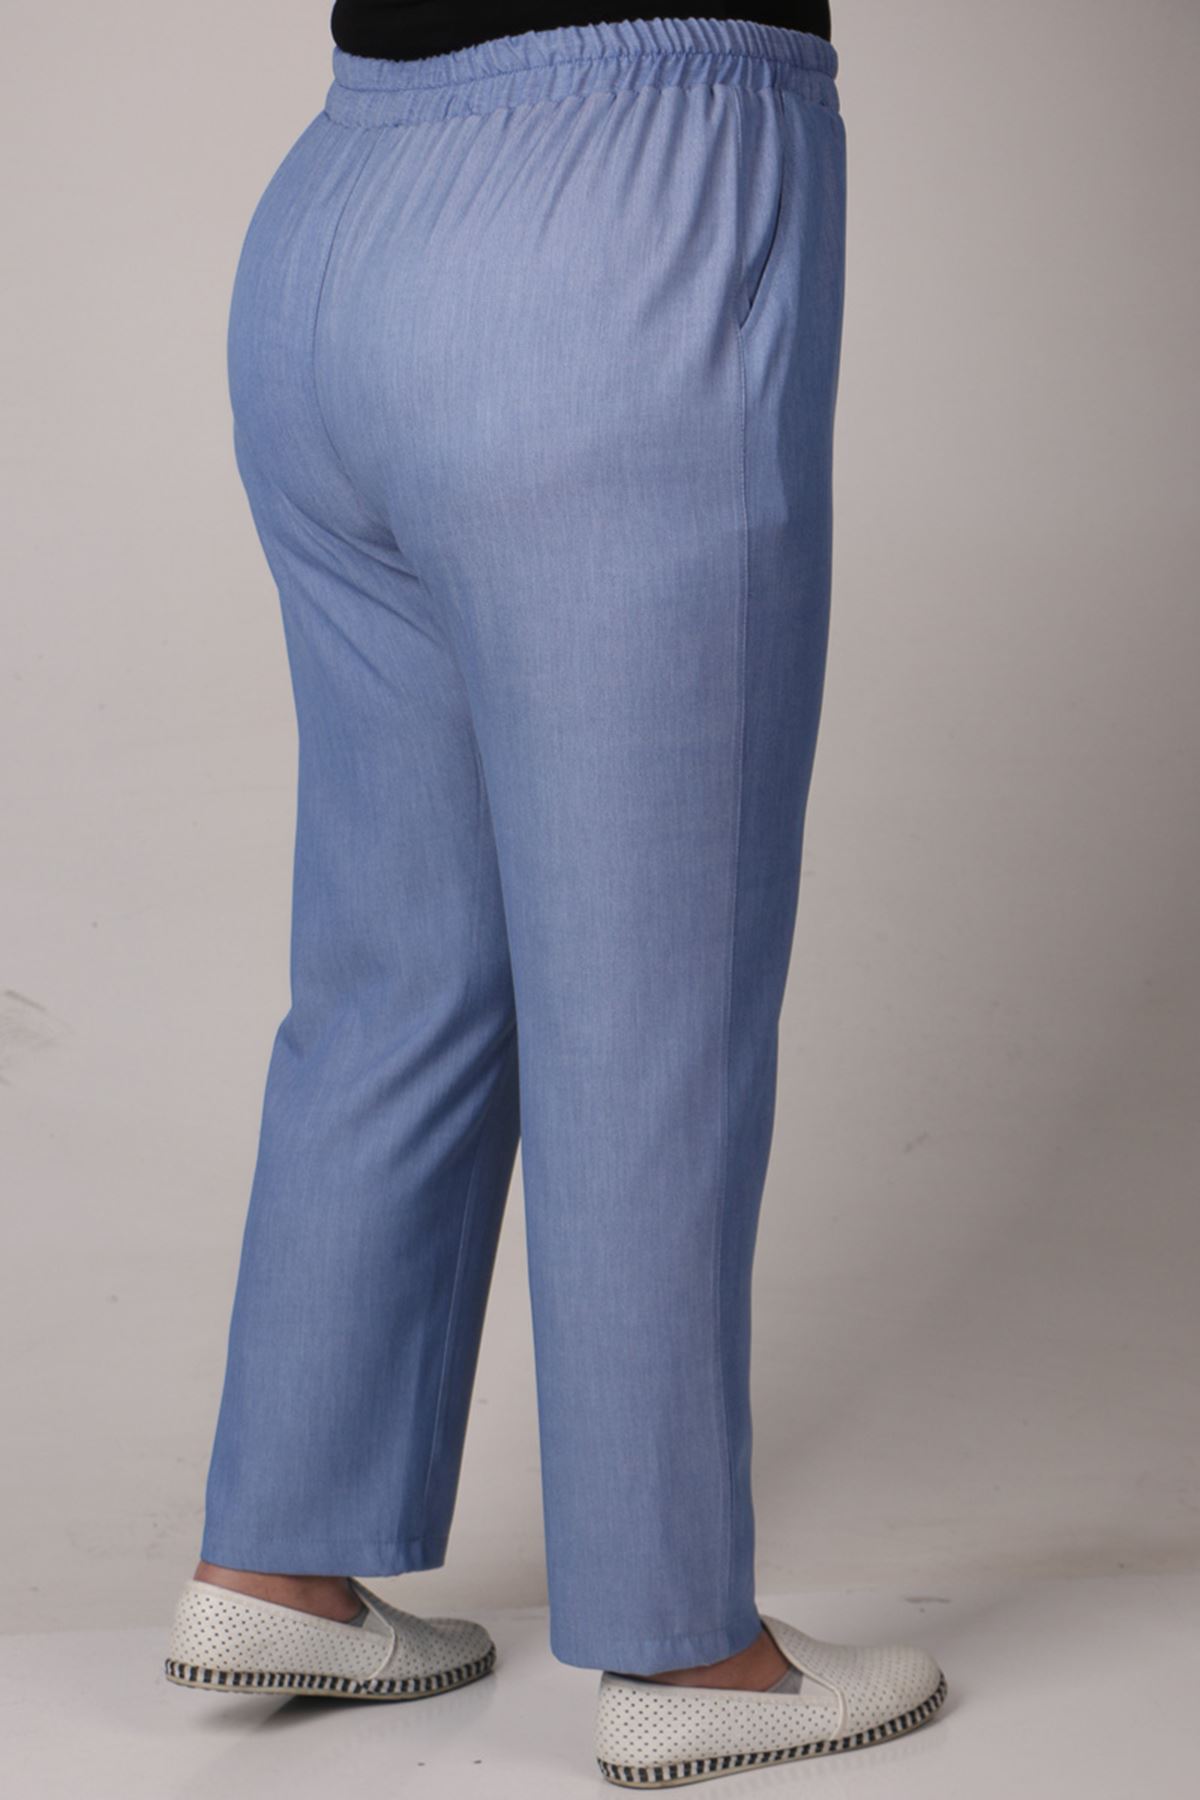 39014 Large Size Elastic Waist Slim Leg Lyocell Trousers-Blue